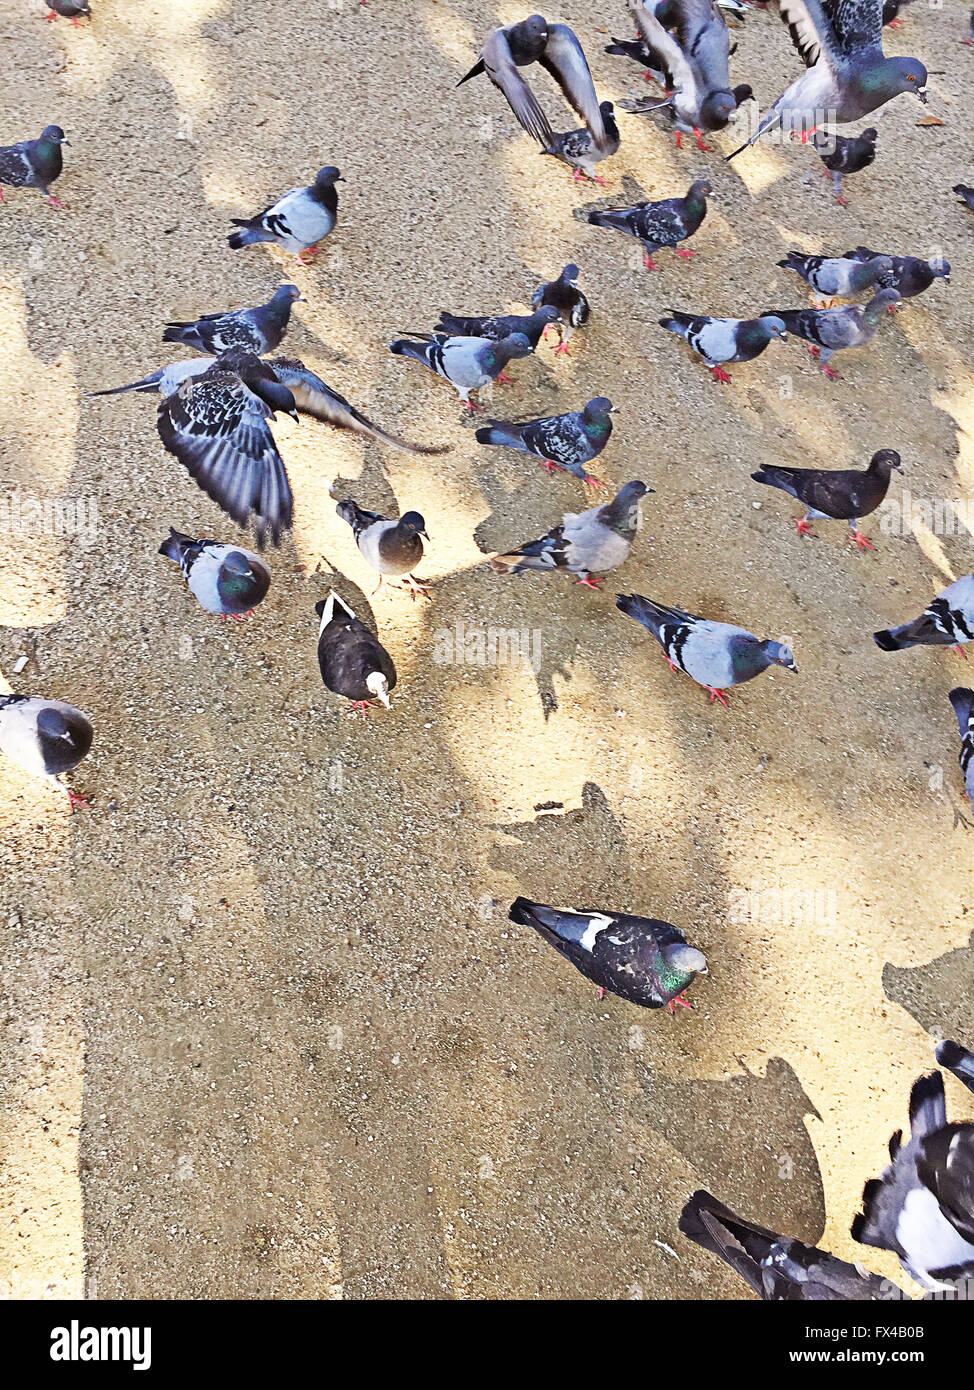 Pigeons on ground Stock Photo